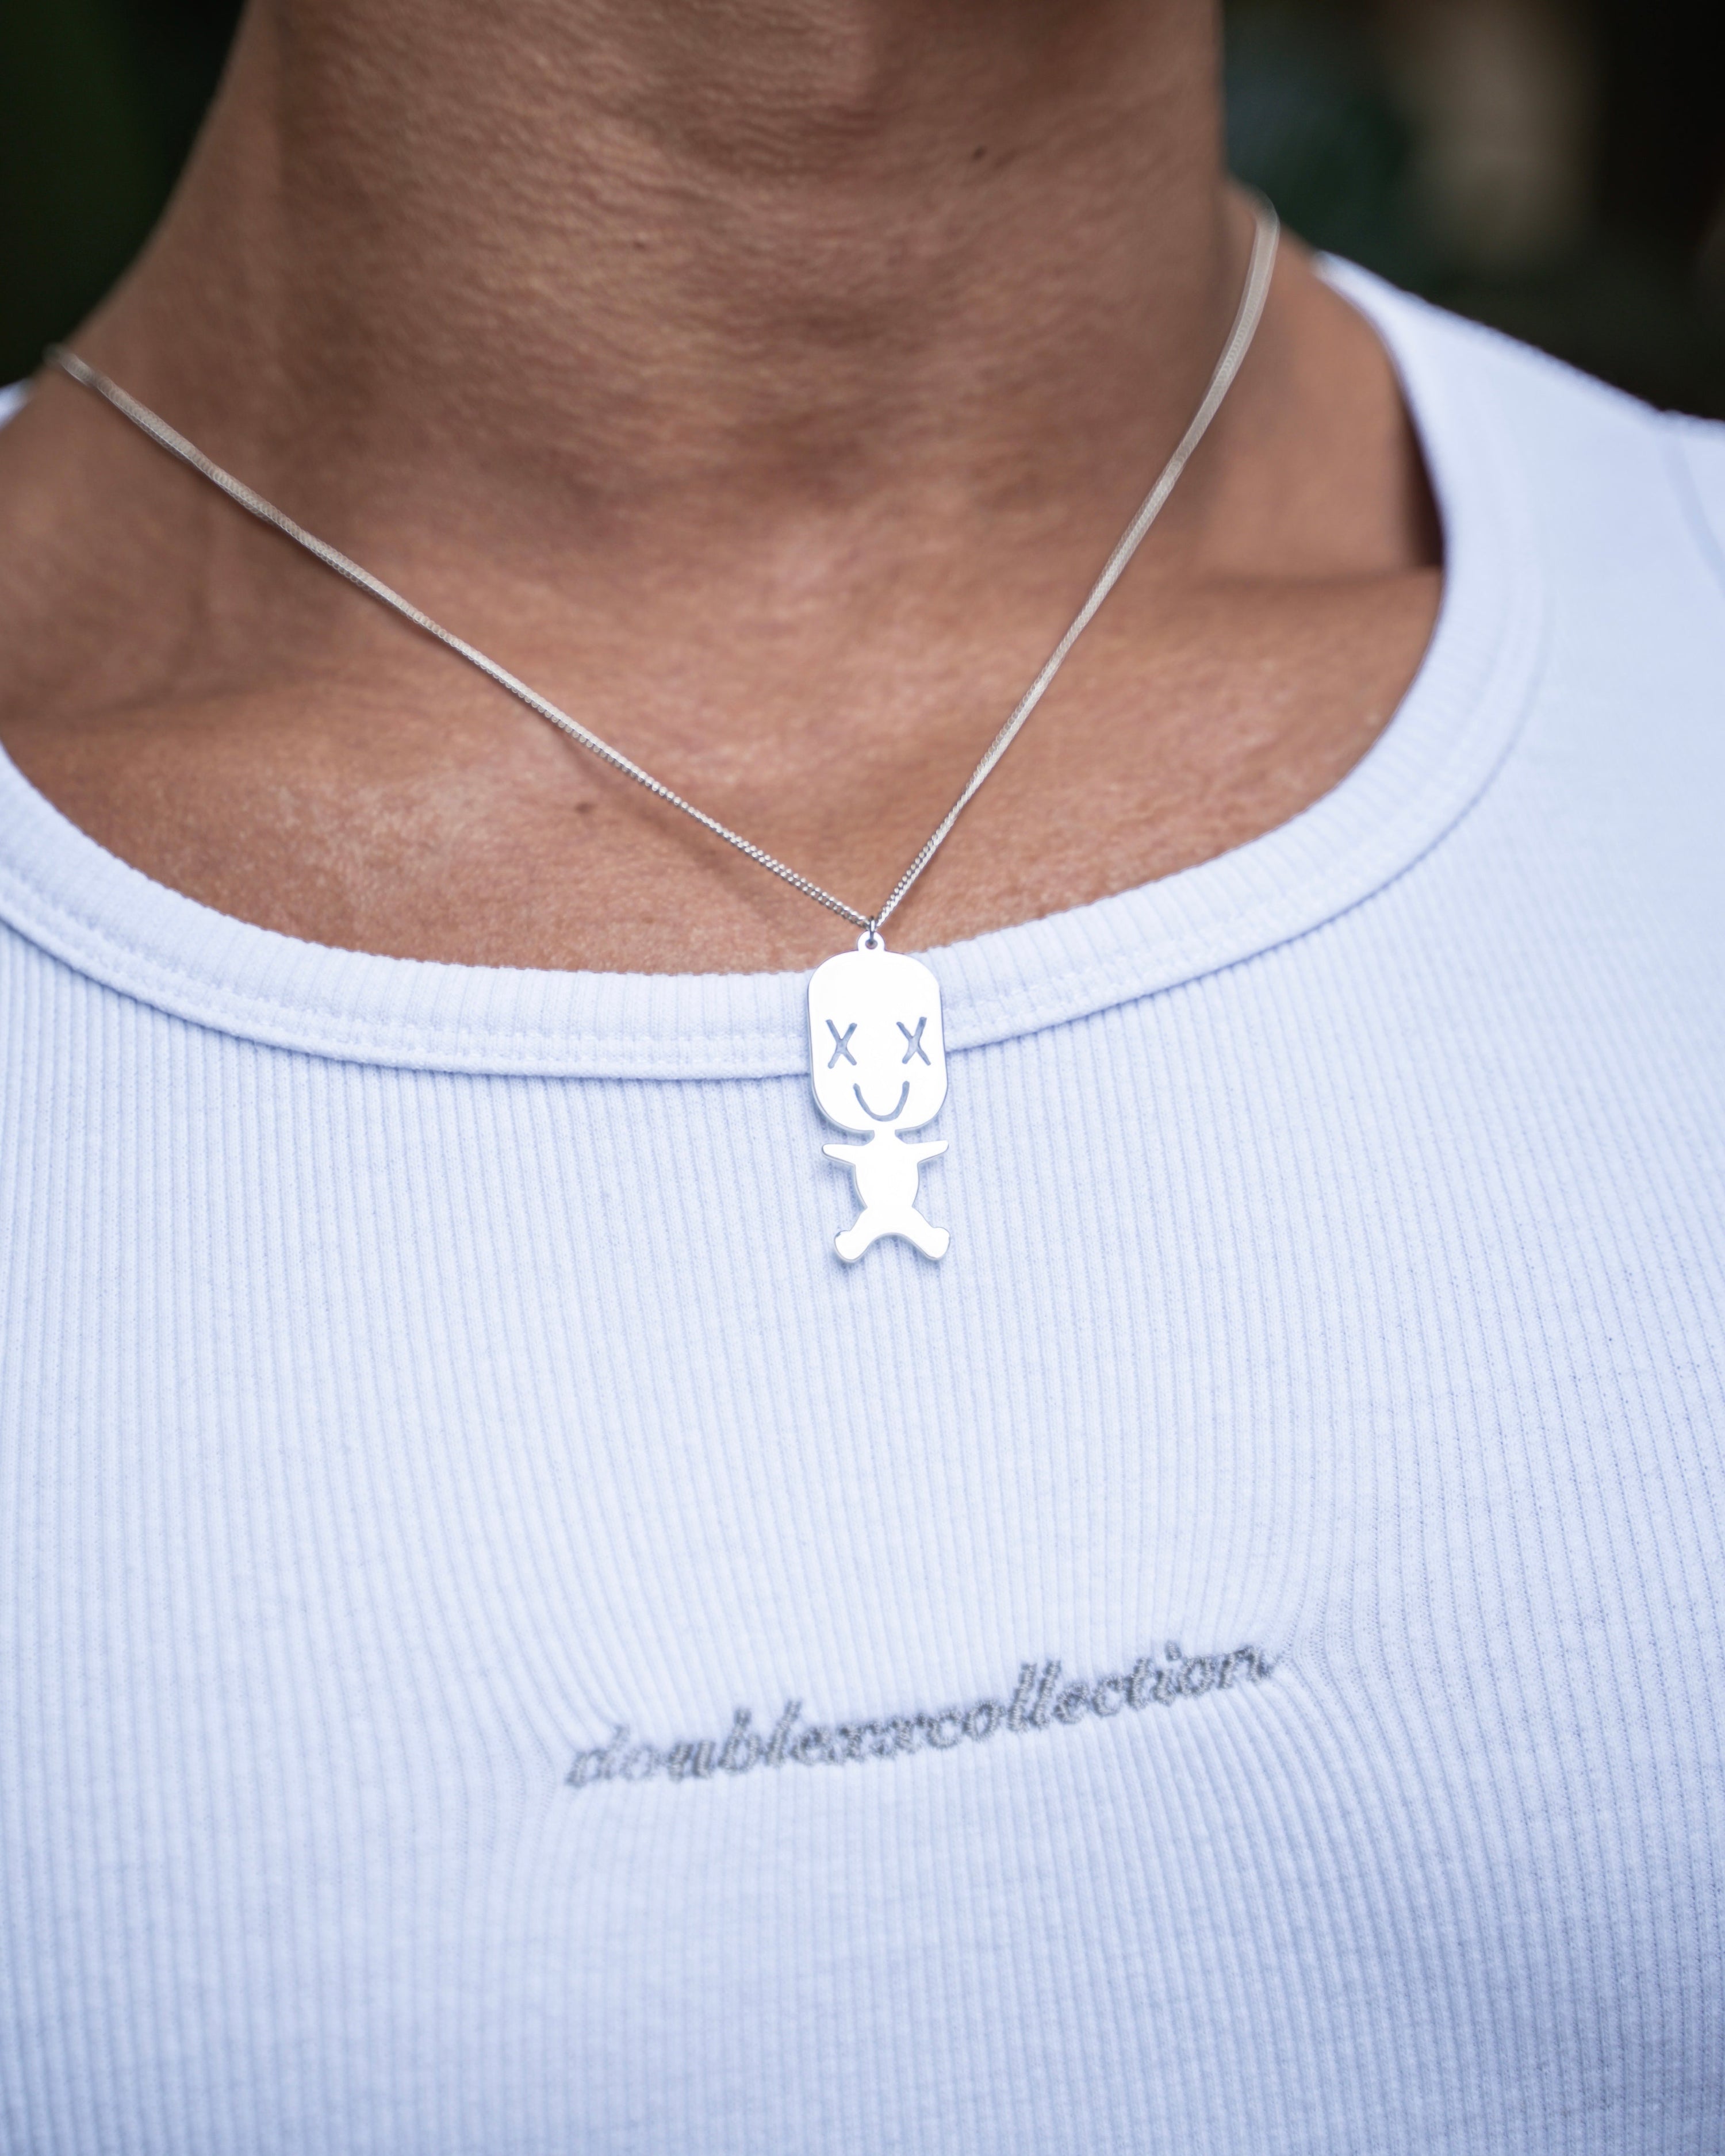 XX Premium Necklace - Silver